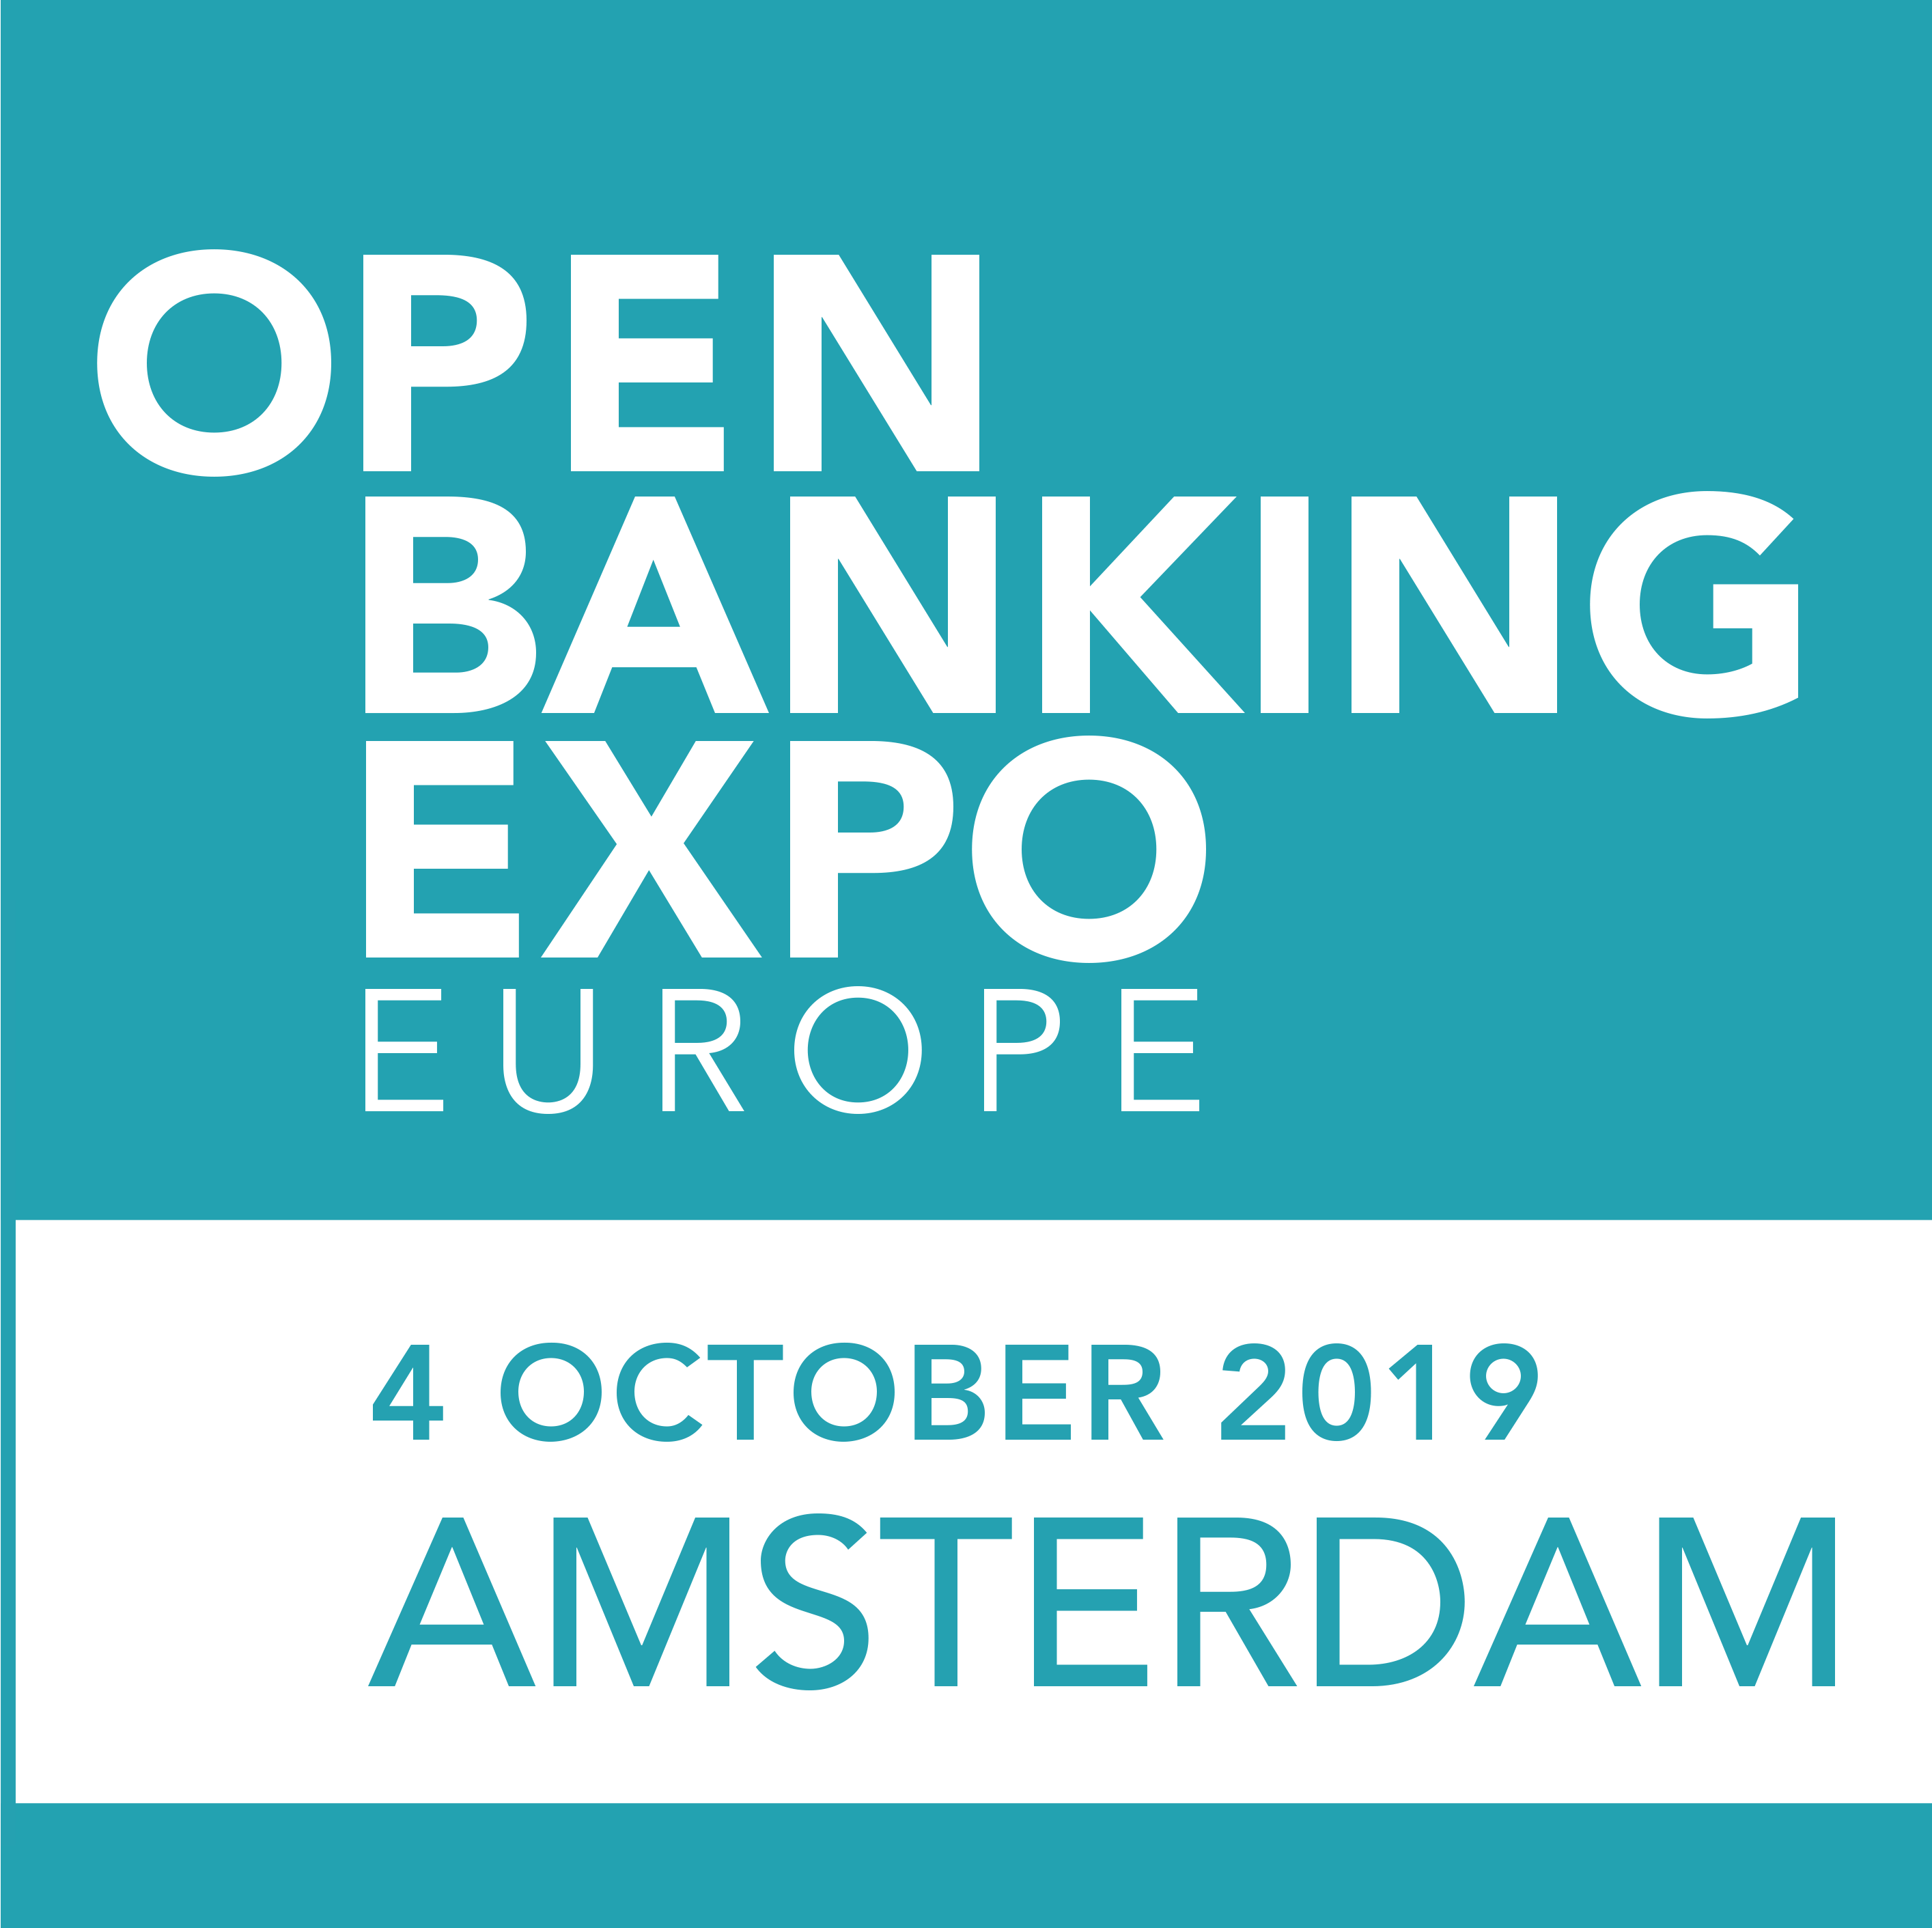 Open Banking Expo Europe organized by Borough Bench Media 